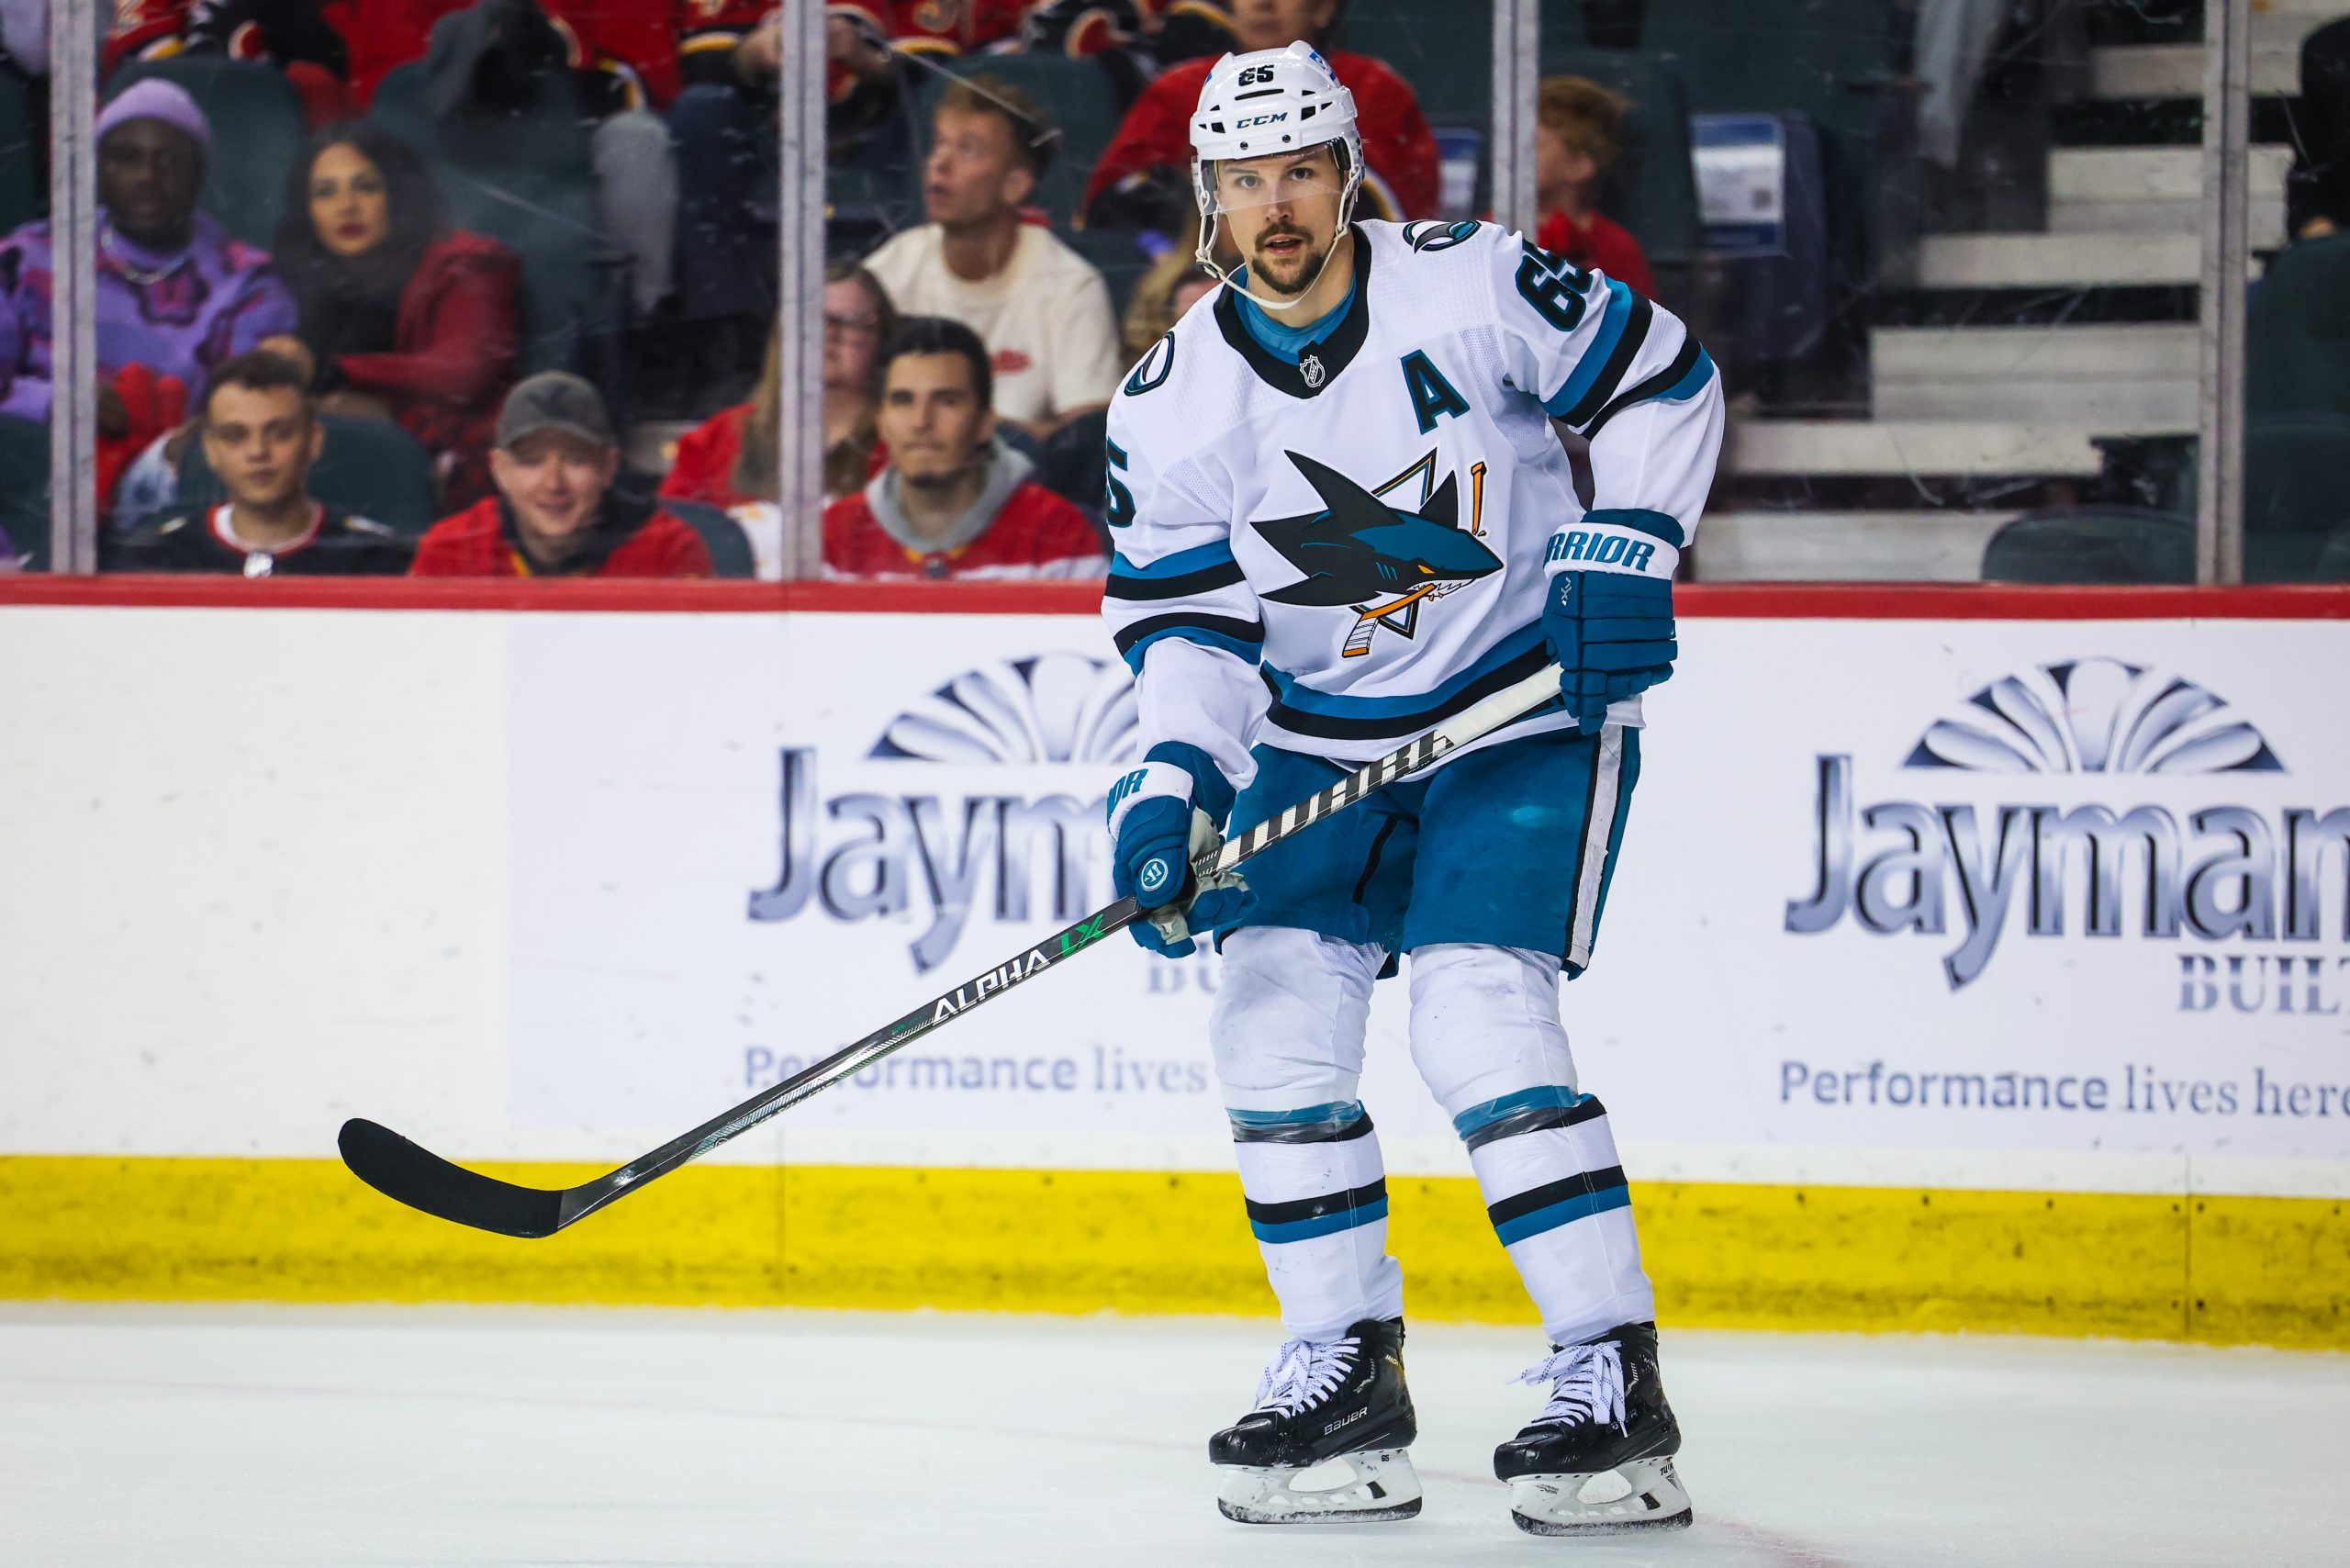 Sharks-Edmonton Oilers: Erik Karlsson's last home game in San Jose?